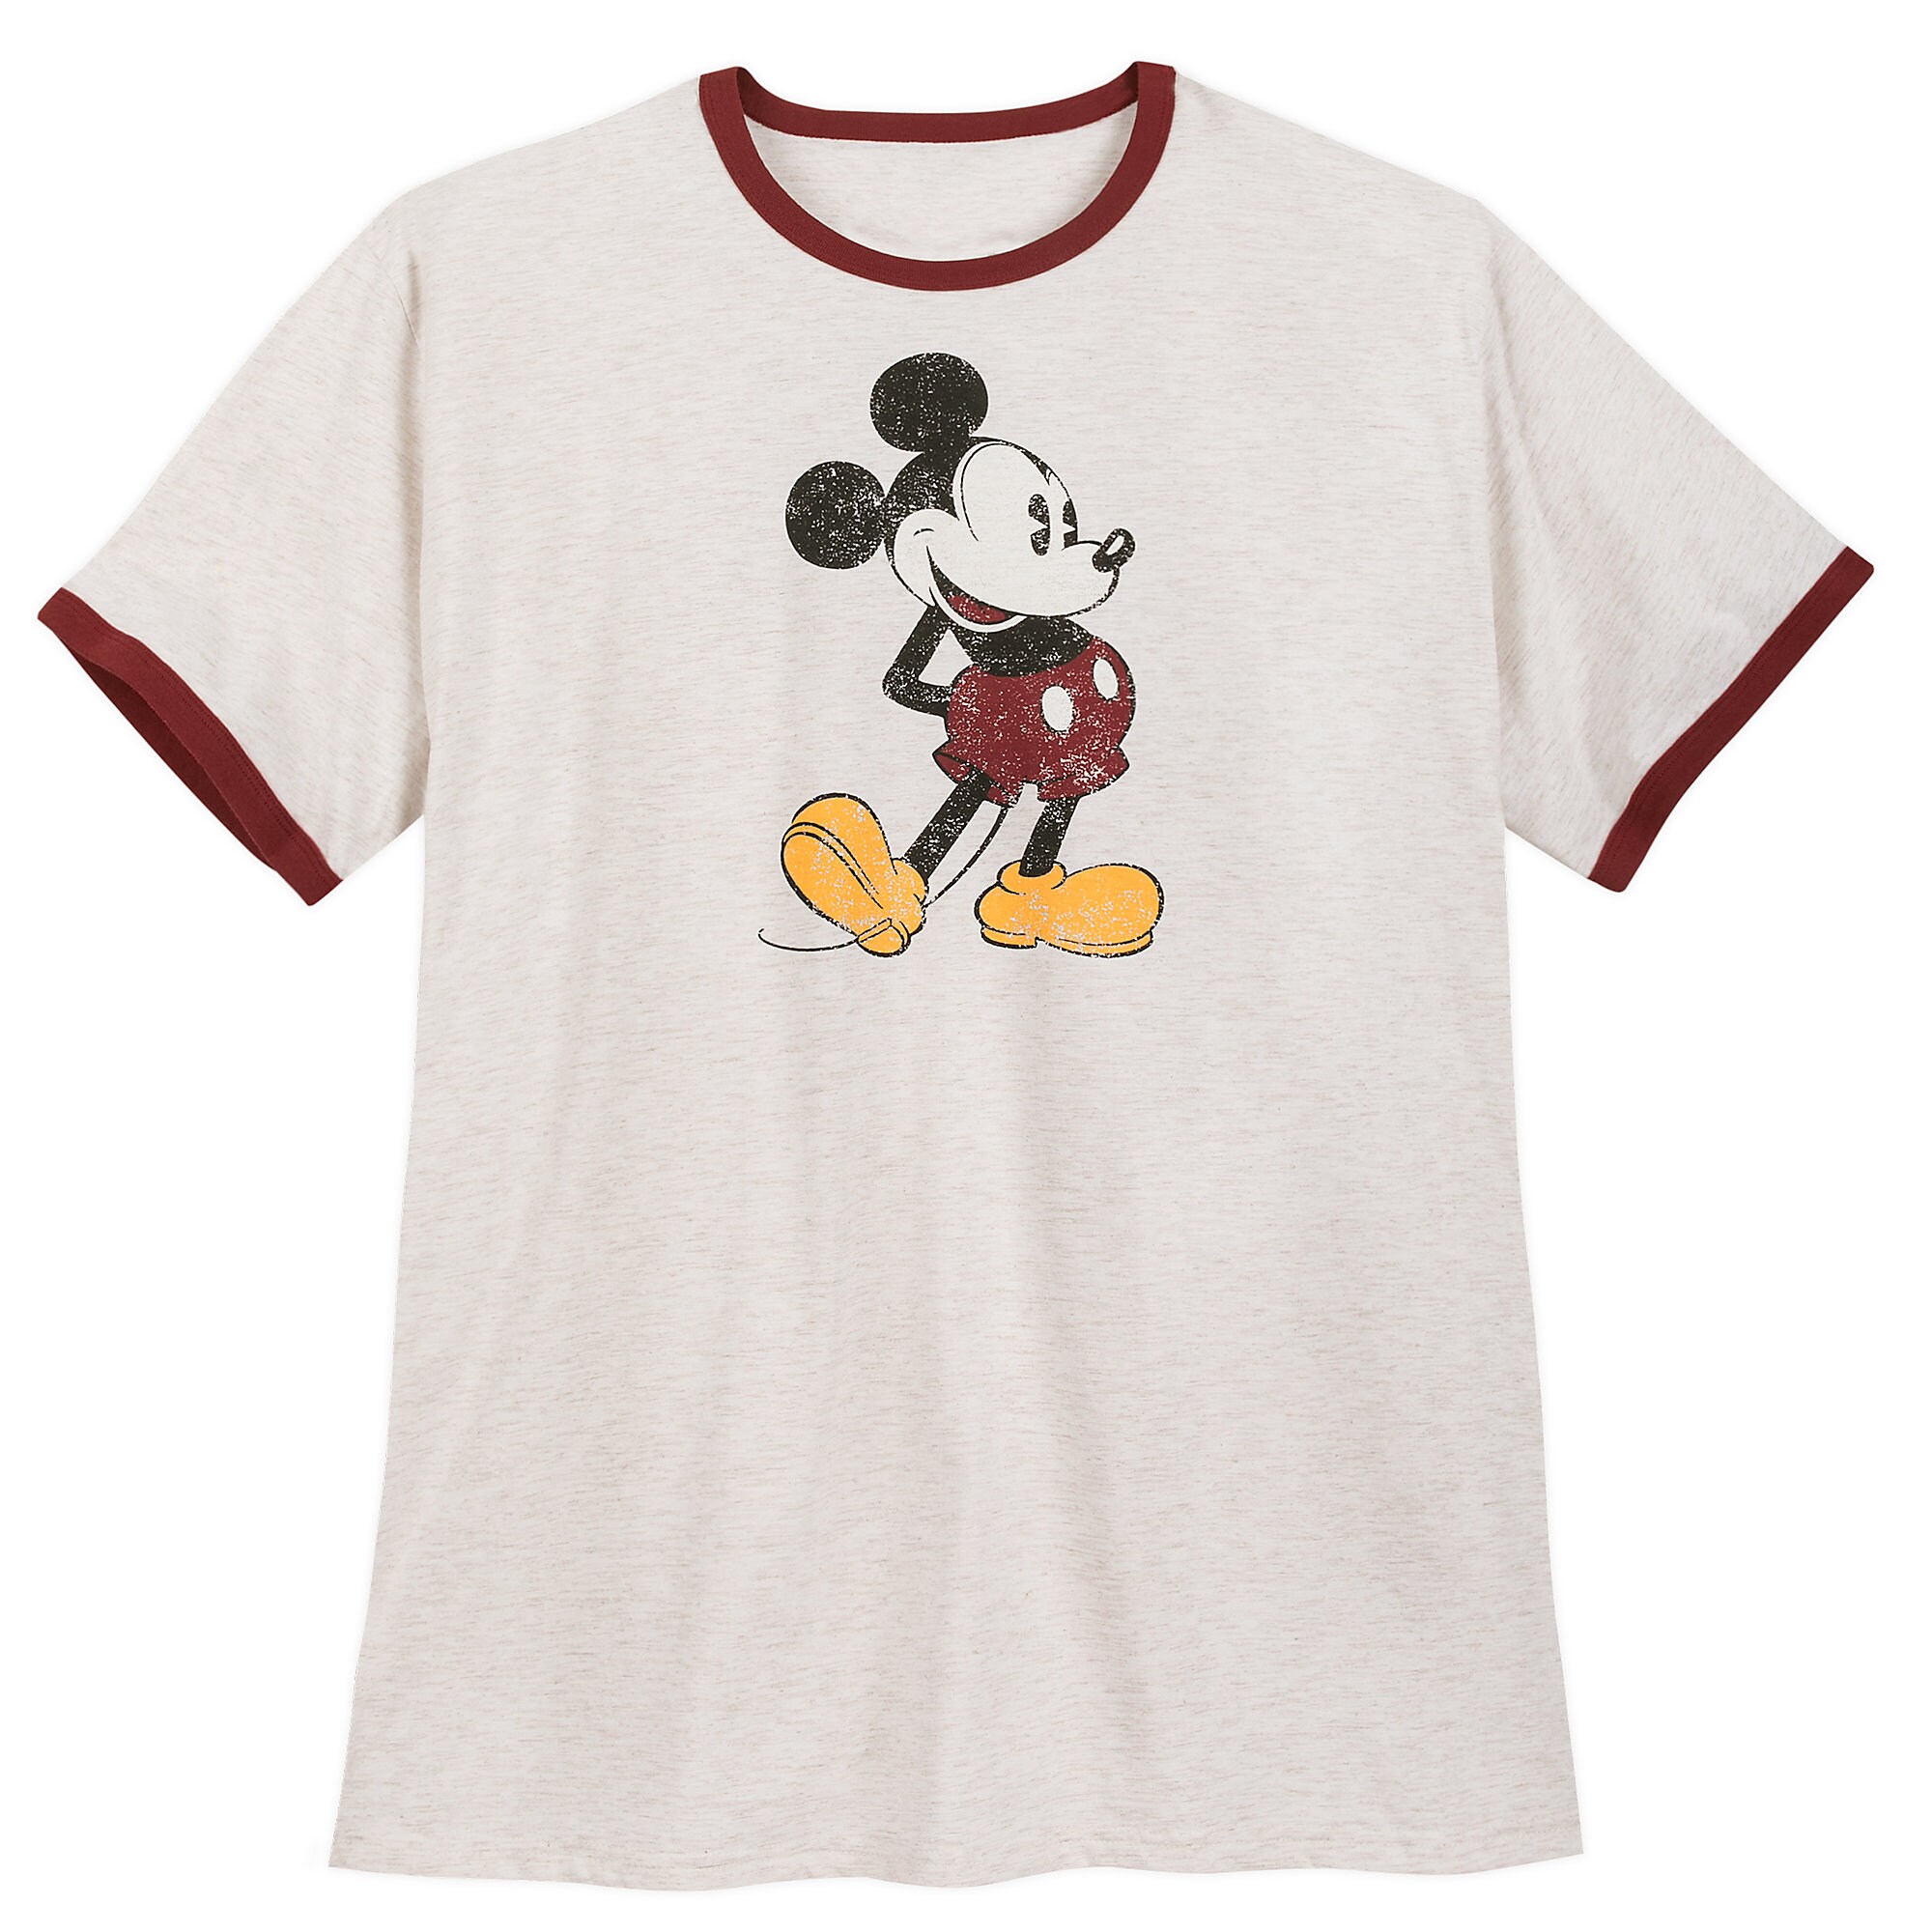 Mickey Mouse Ringer T-Shirt for Men - Extended Size